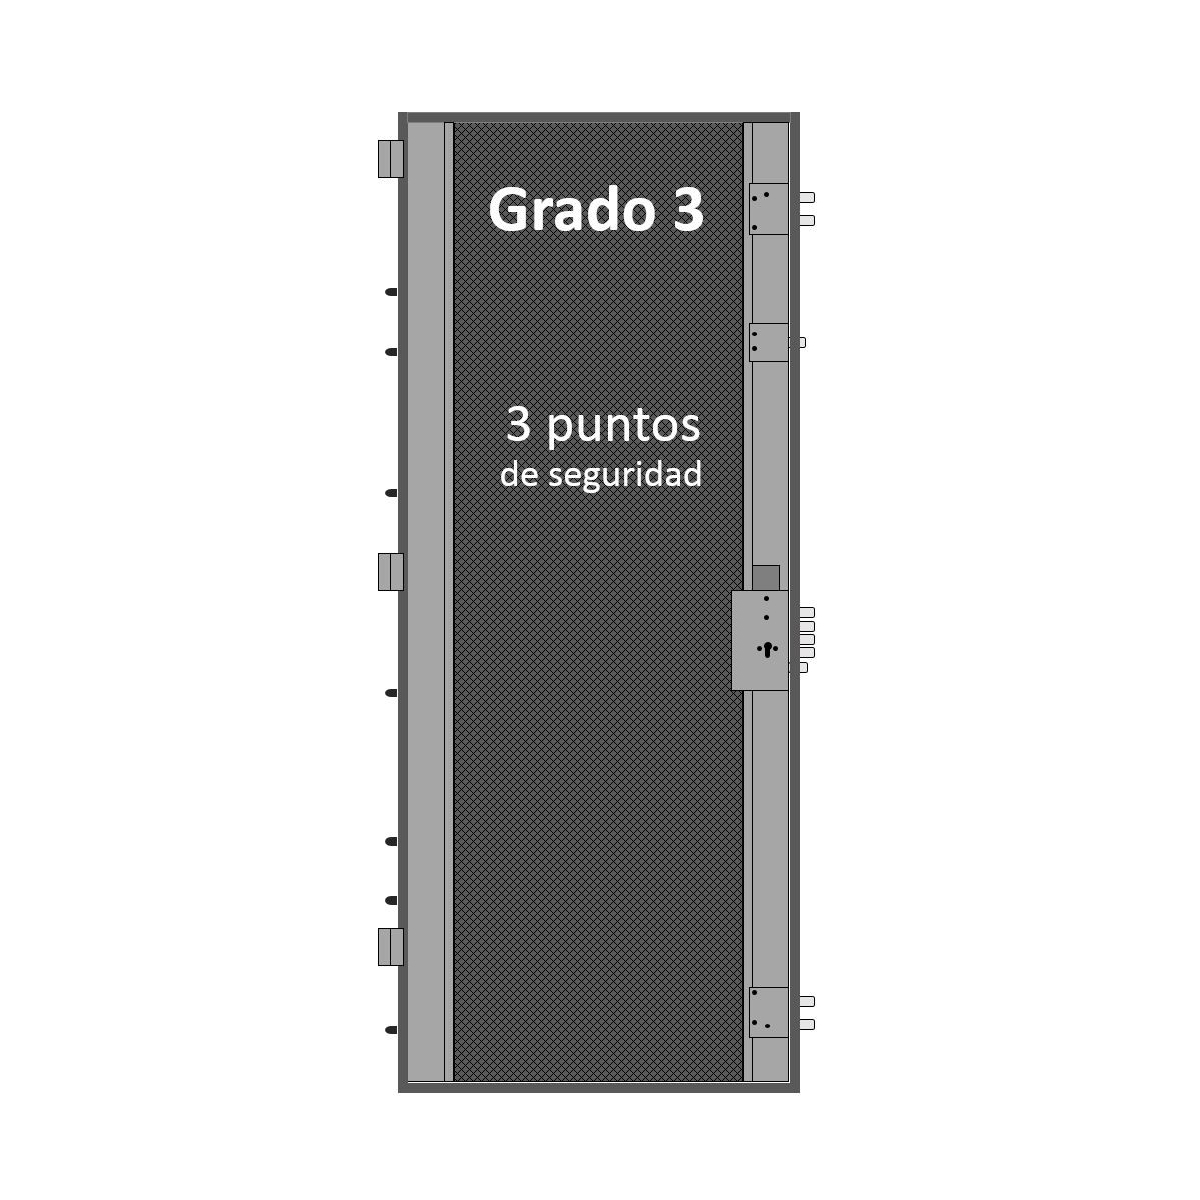 Puertas acorazadas Serie Omega Cearco - Puerta Acorazada 100cm grado 3 Lanzuela Omega